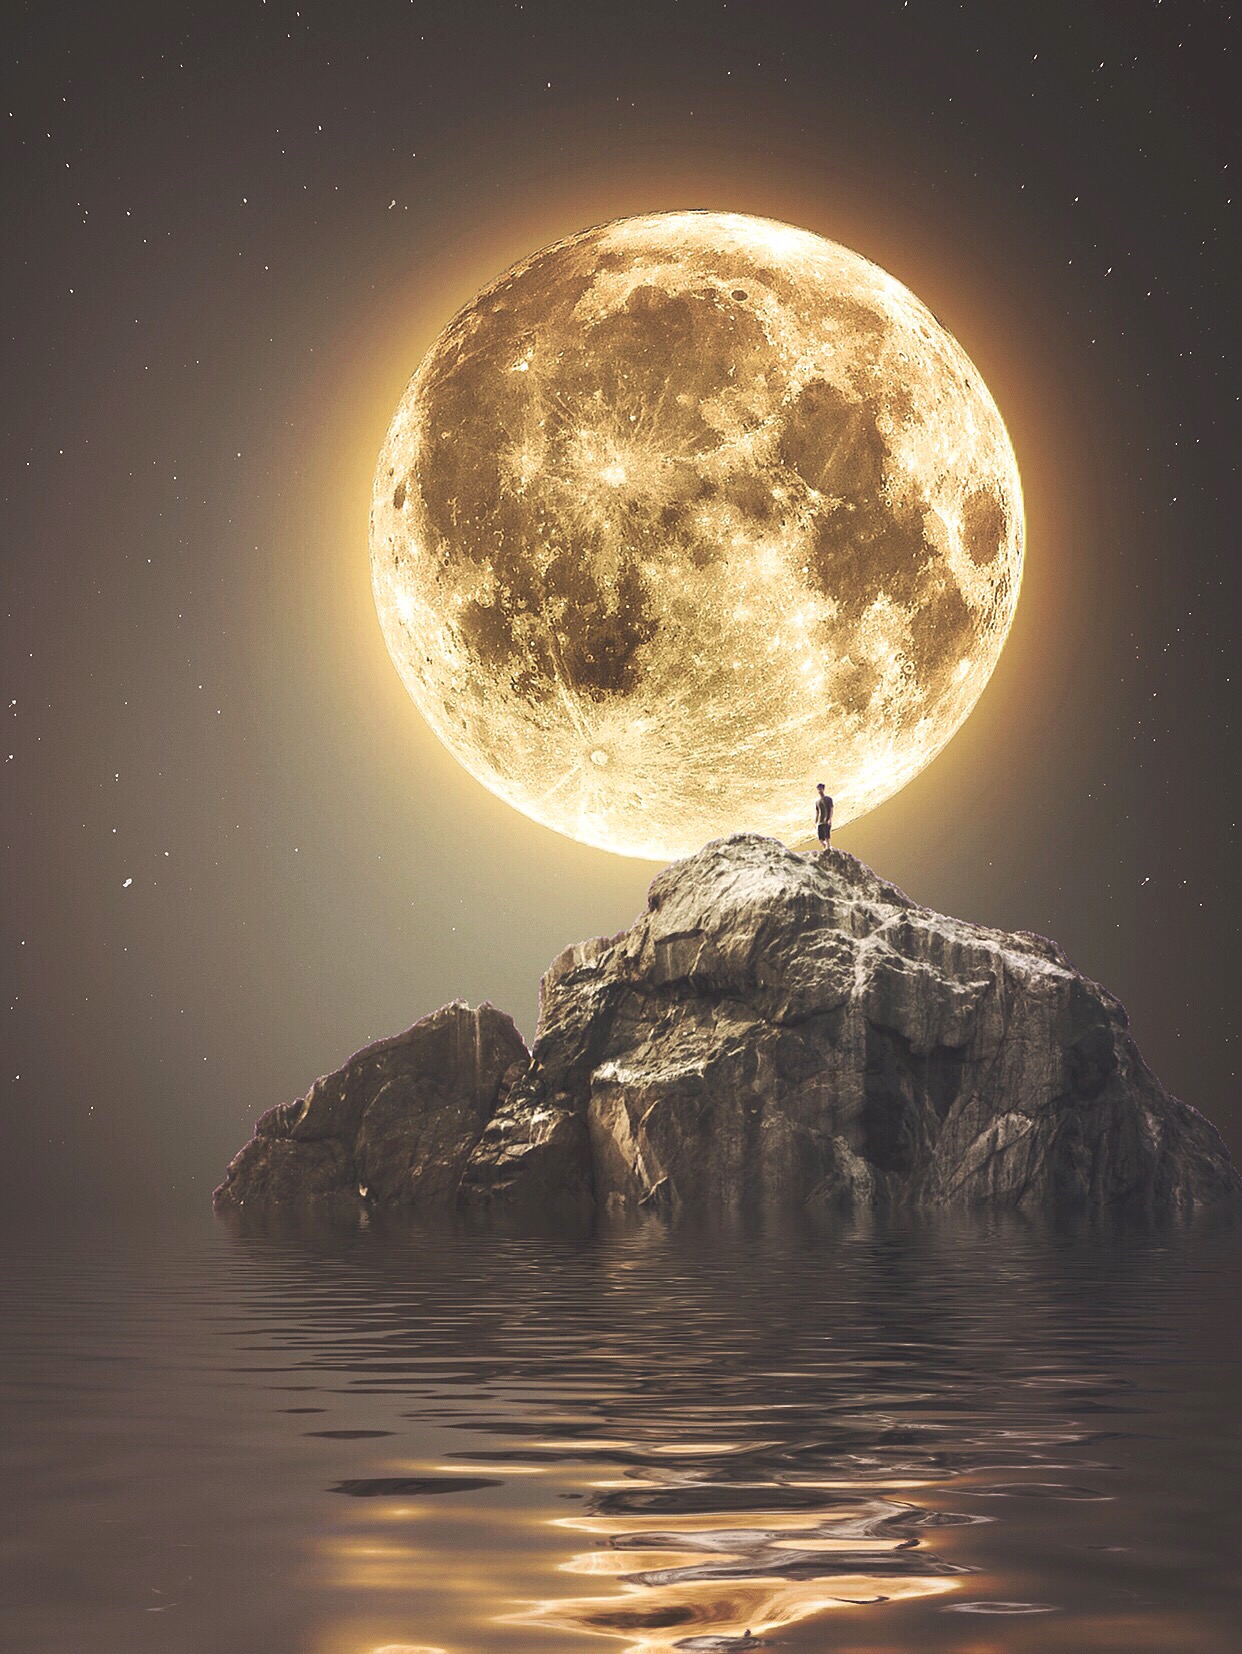 This visual is about madewithpicsart surreal imaginaryworld moon “Moon Drop” .